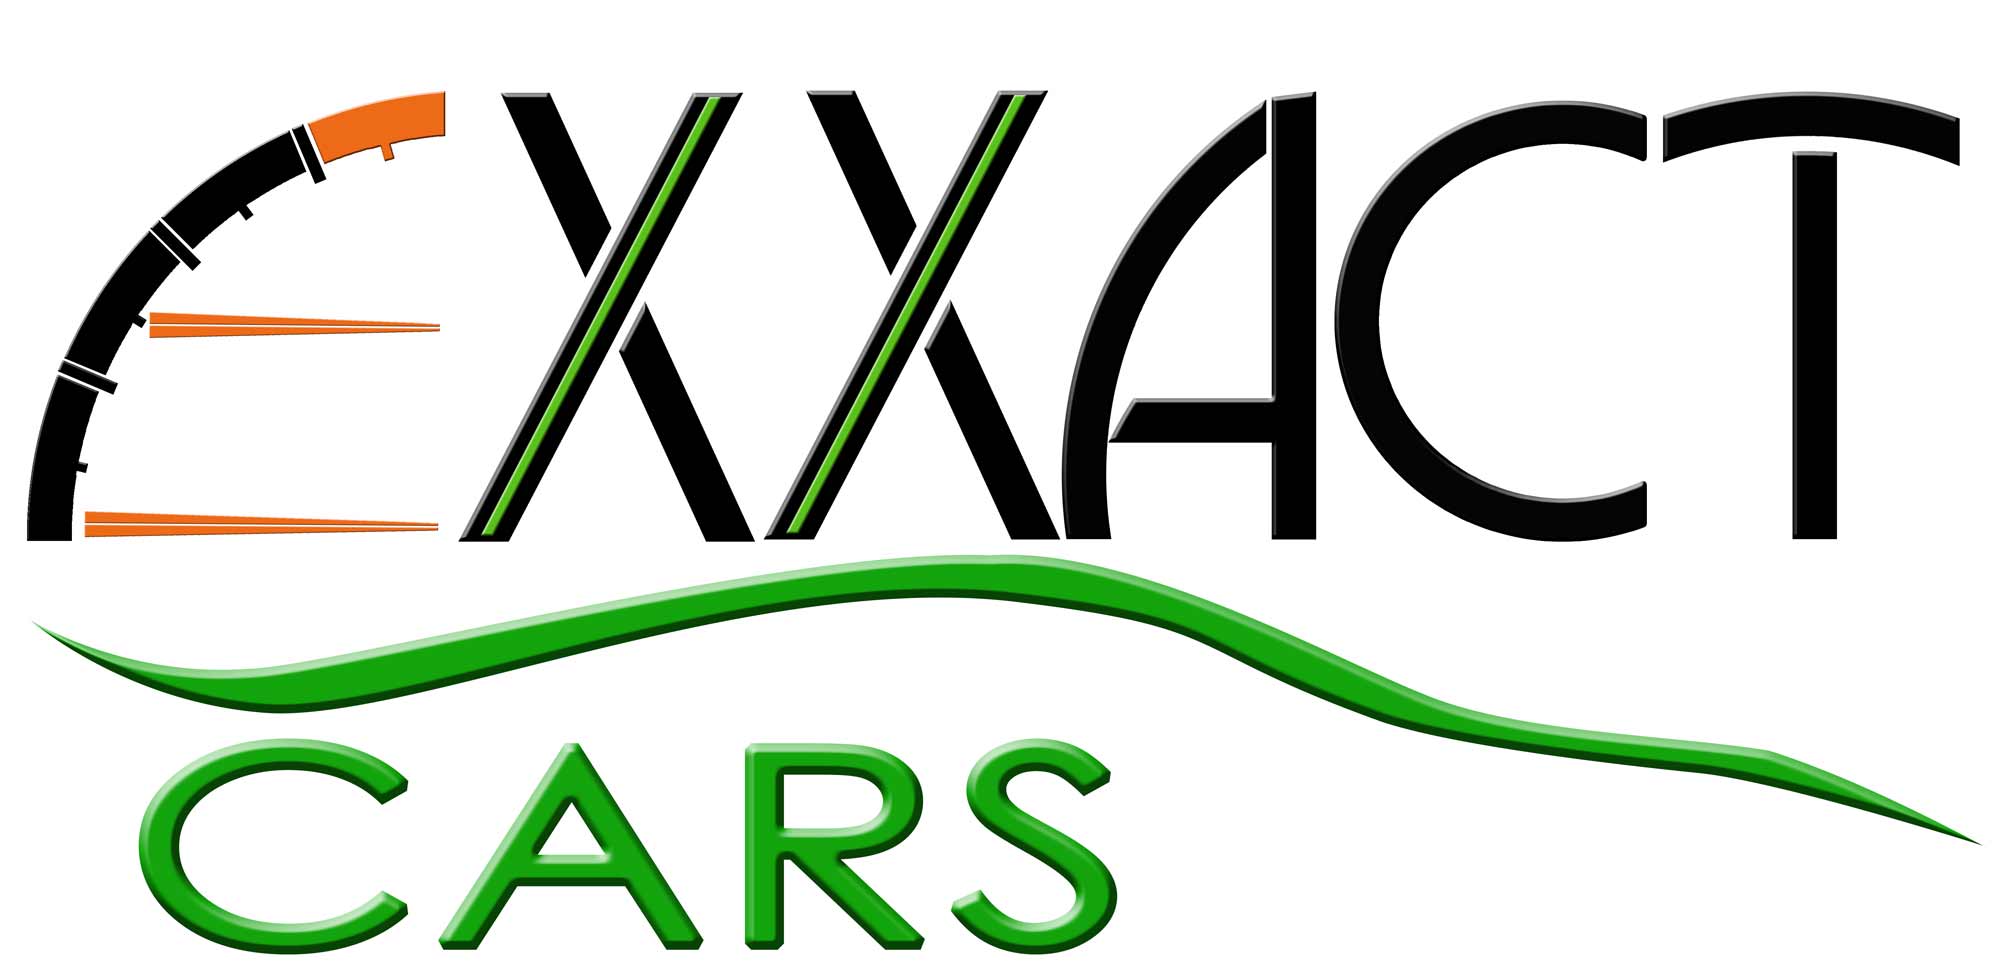 Exxact Cars LLC